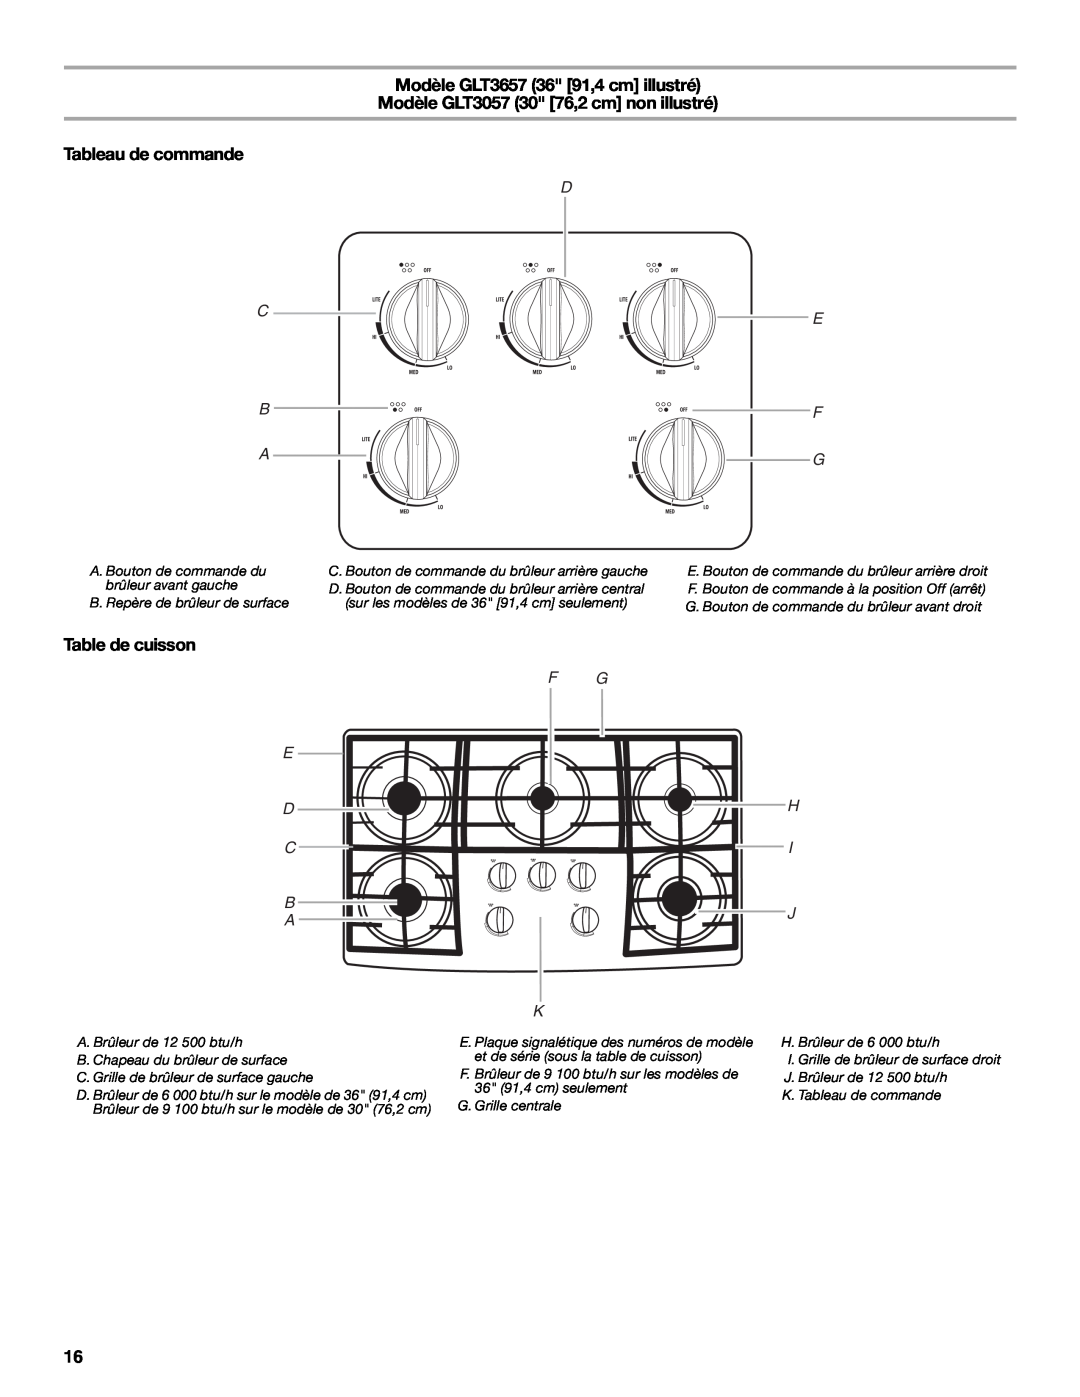 Whirlpool W3CG3014XB manual Modèle GLT3657 36 91,4 cm illustré, Modèle GLT3057 30 76,2 cm non illustré, Tableau de commande 